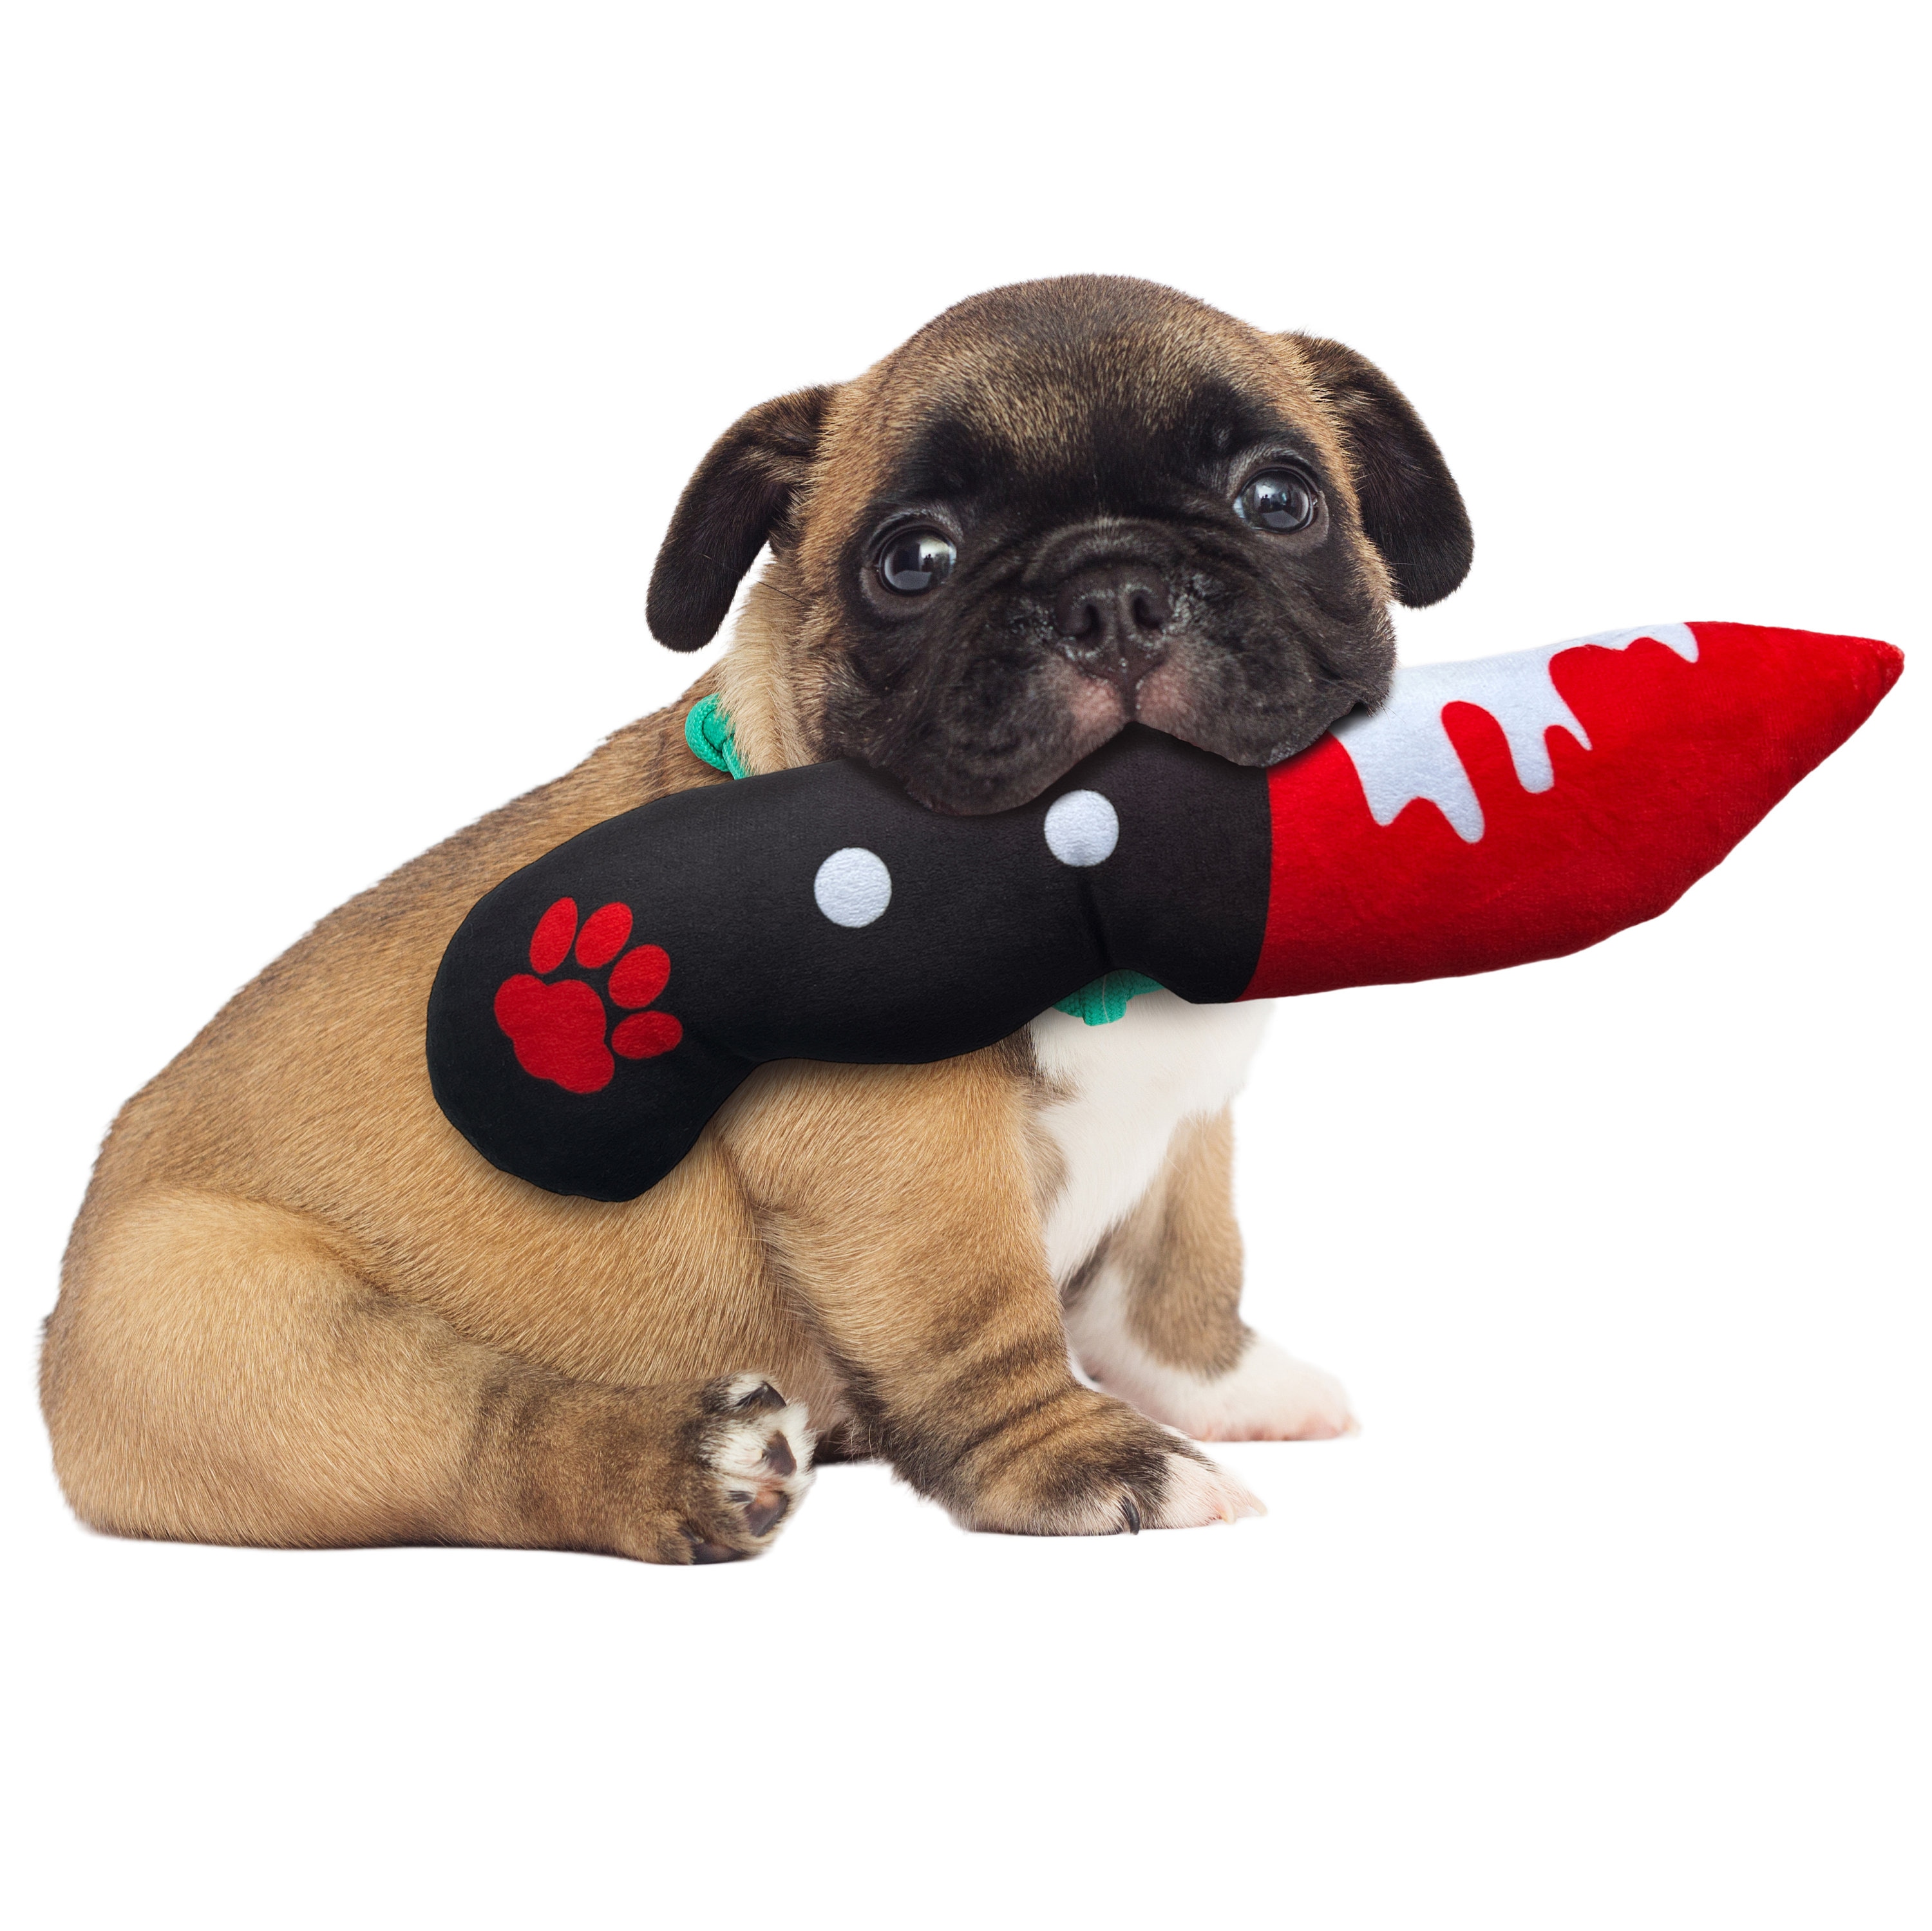 Designer-Inspired Fuzzy Friends: Parody Plush Dog Toys for